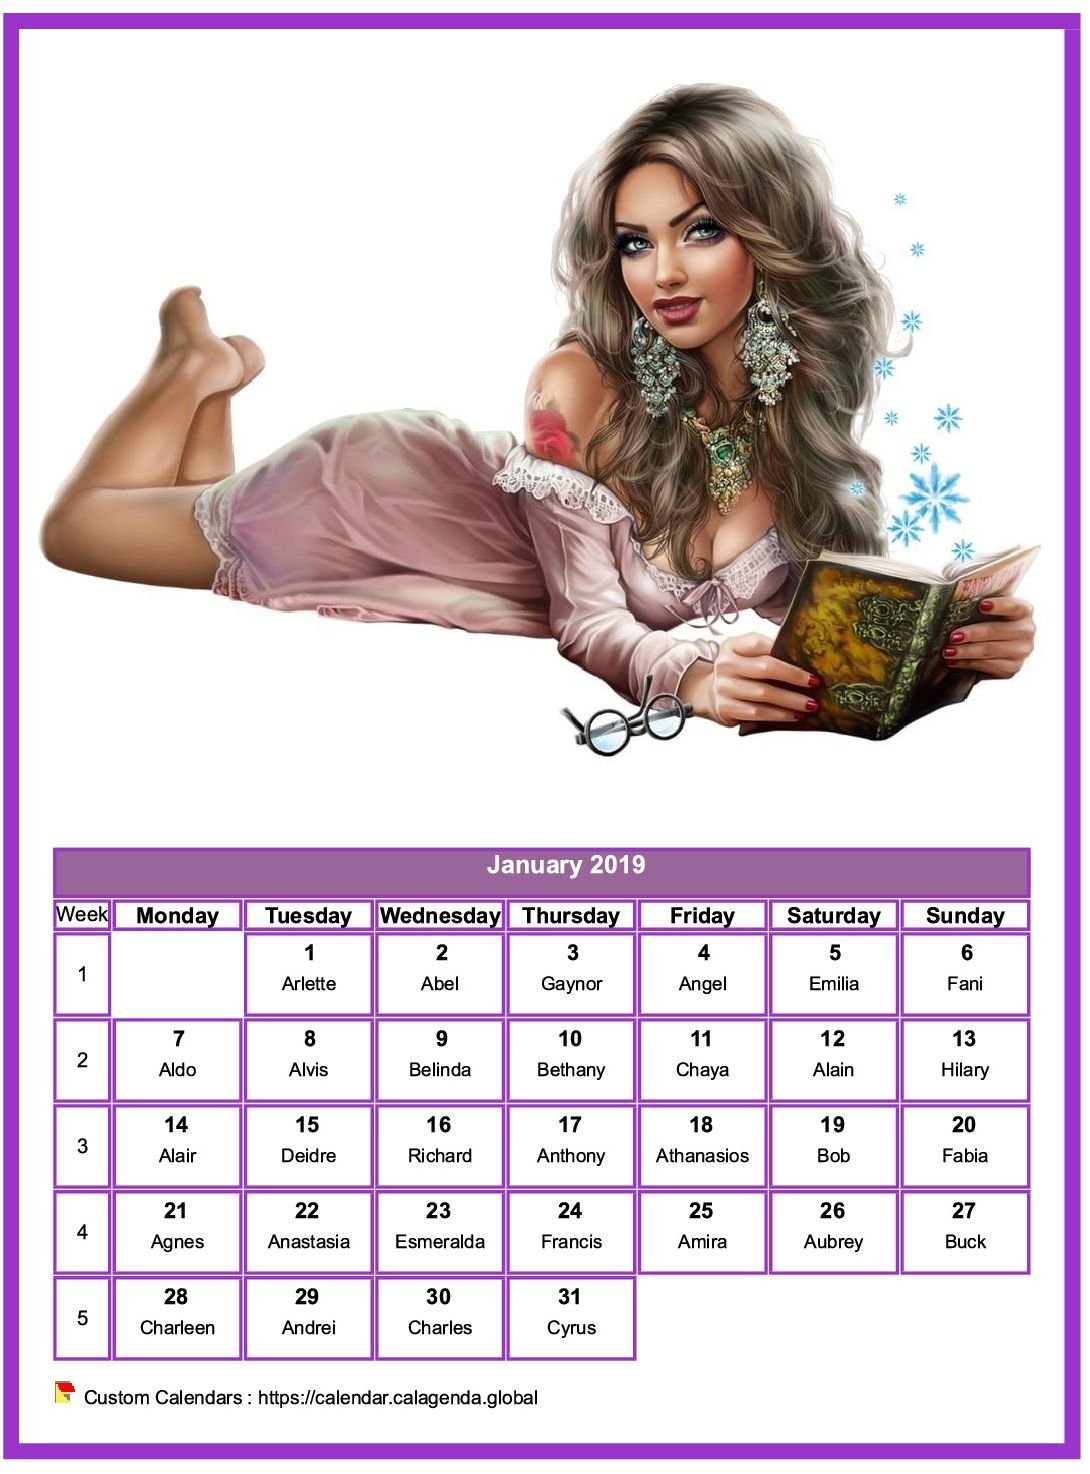 Calendar January 2019 women